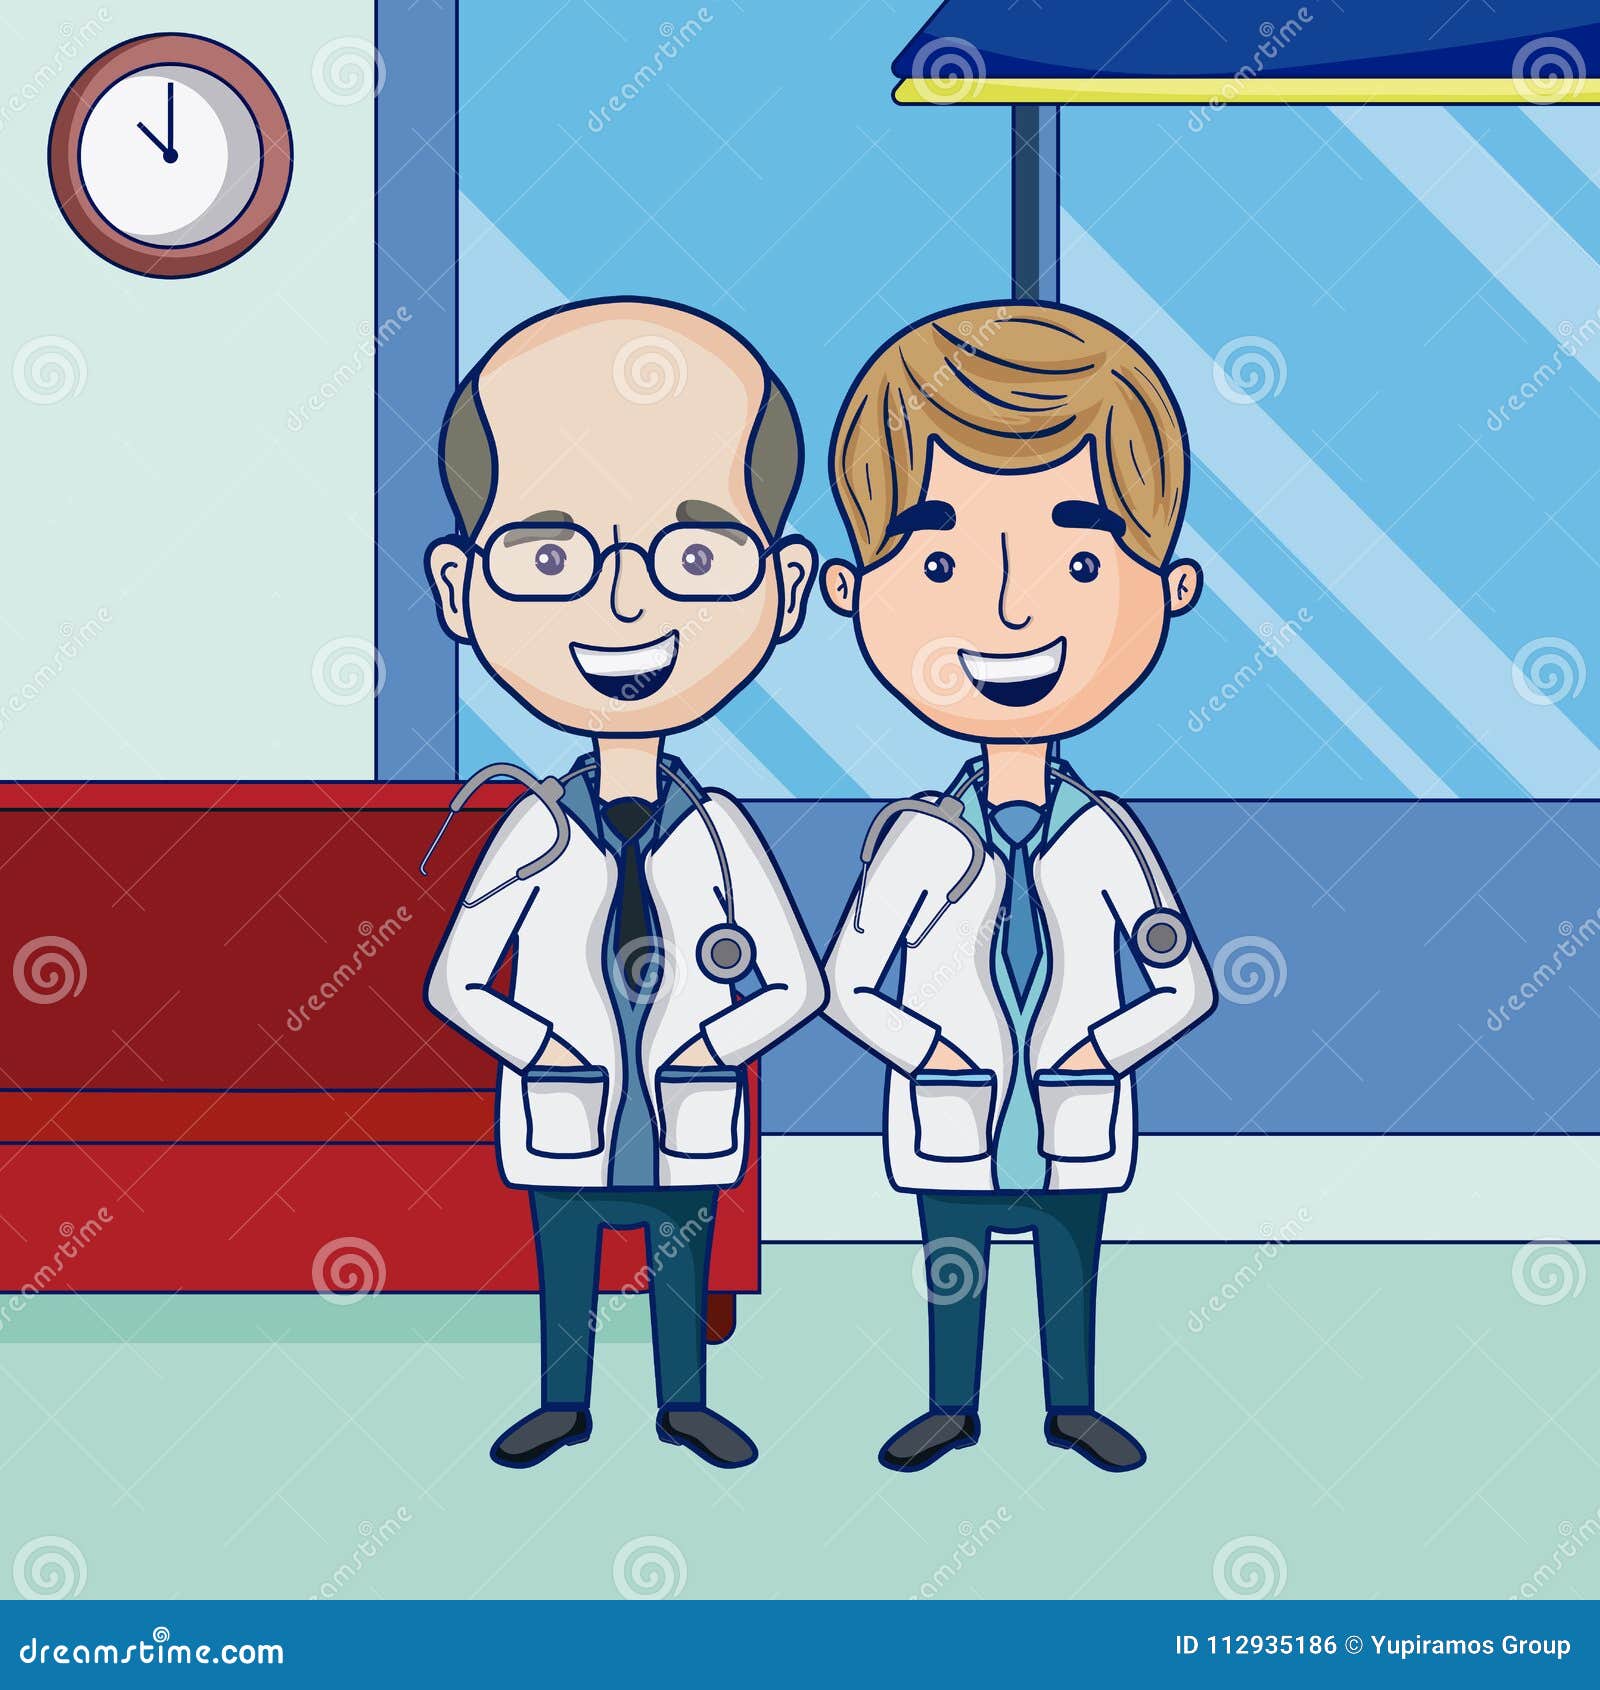 Funny doctors cartoons stock vector. Illustration of happy - 112935186